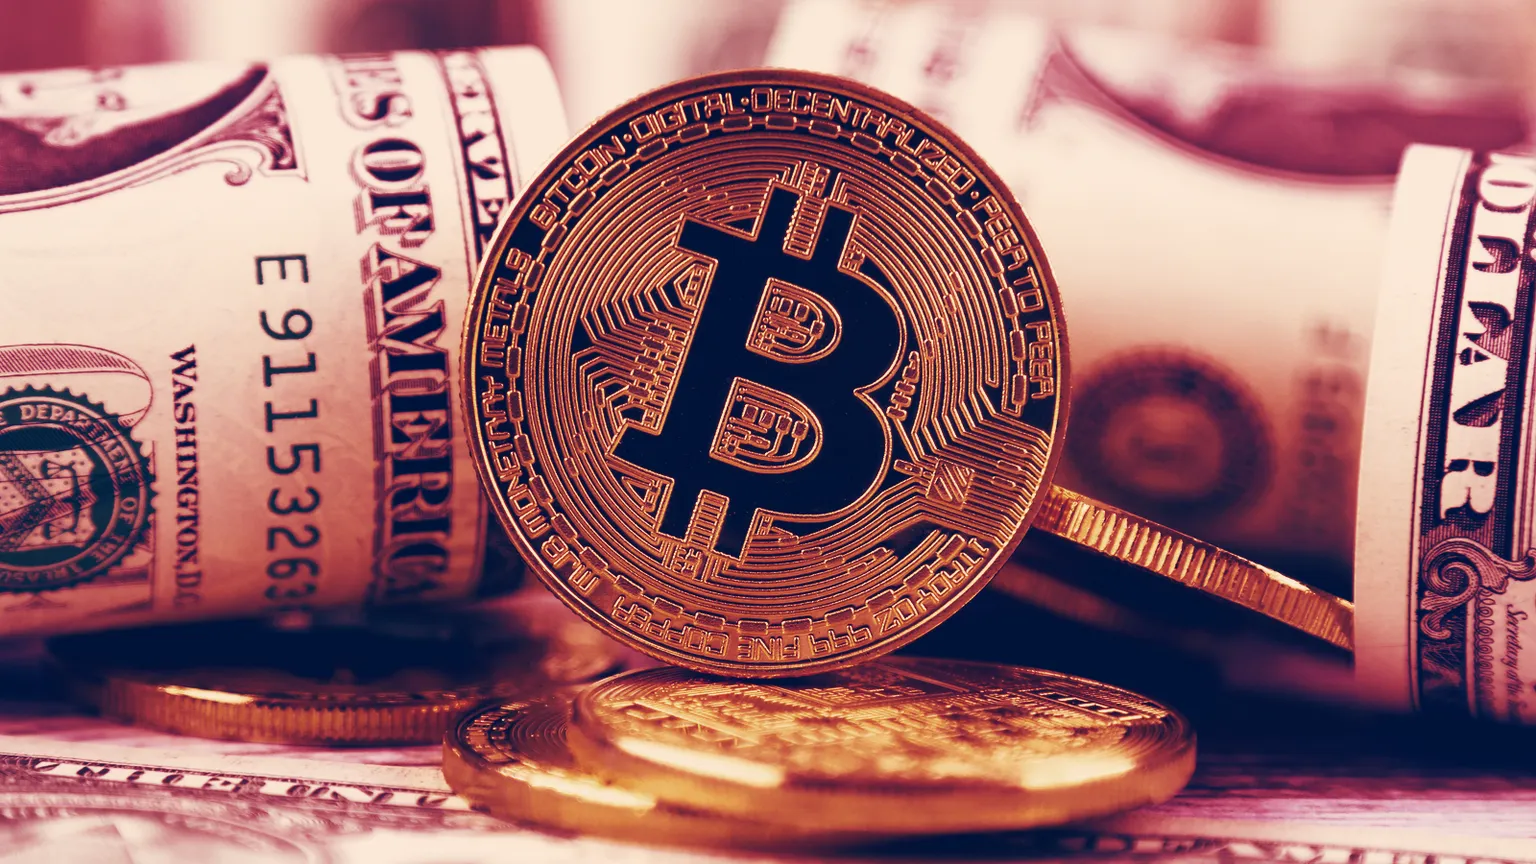 Bitcoin is like digital cash. Image: Shutterstock